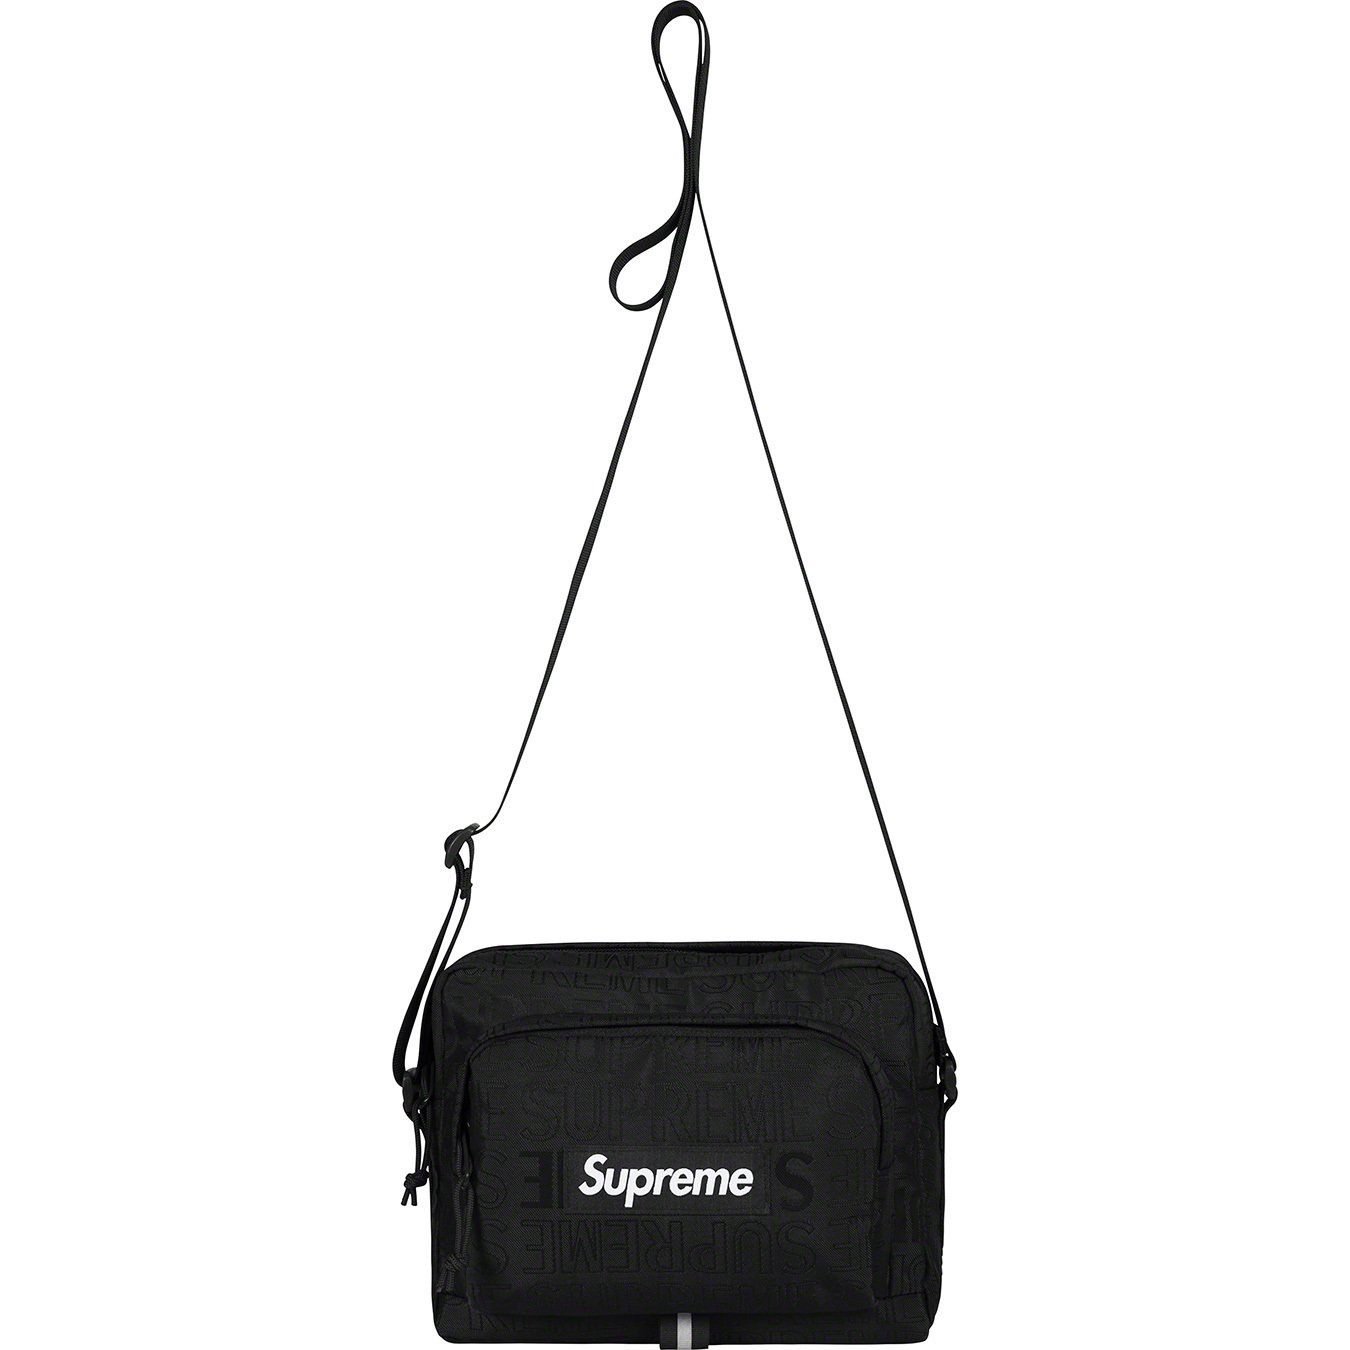 SS19 Supreme shoulder bag Black Cordura Fabric